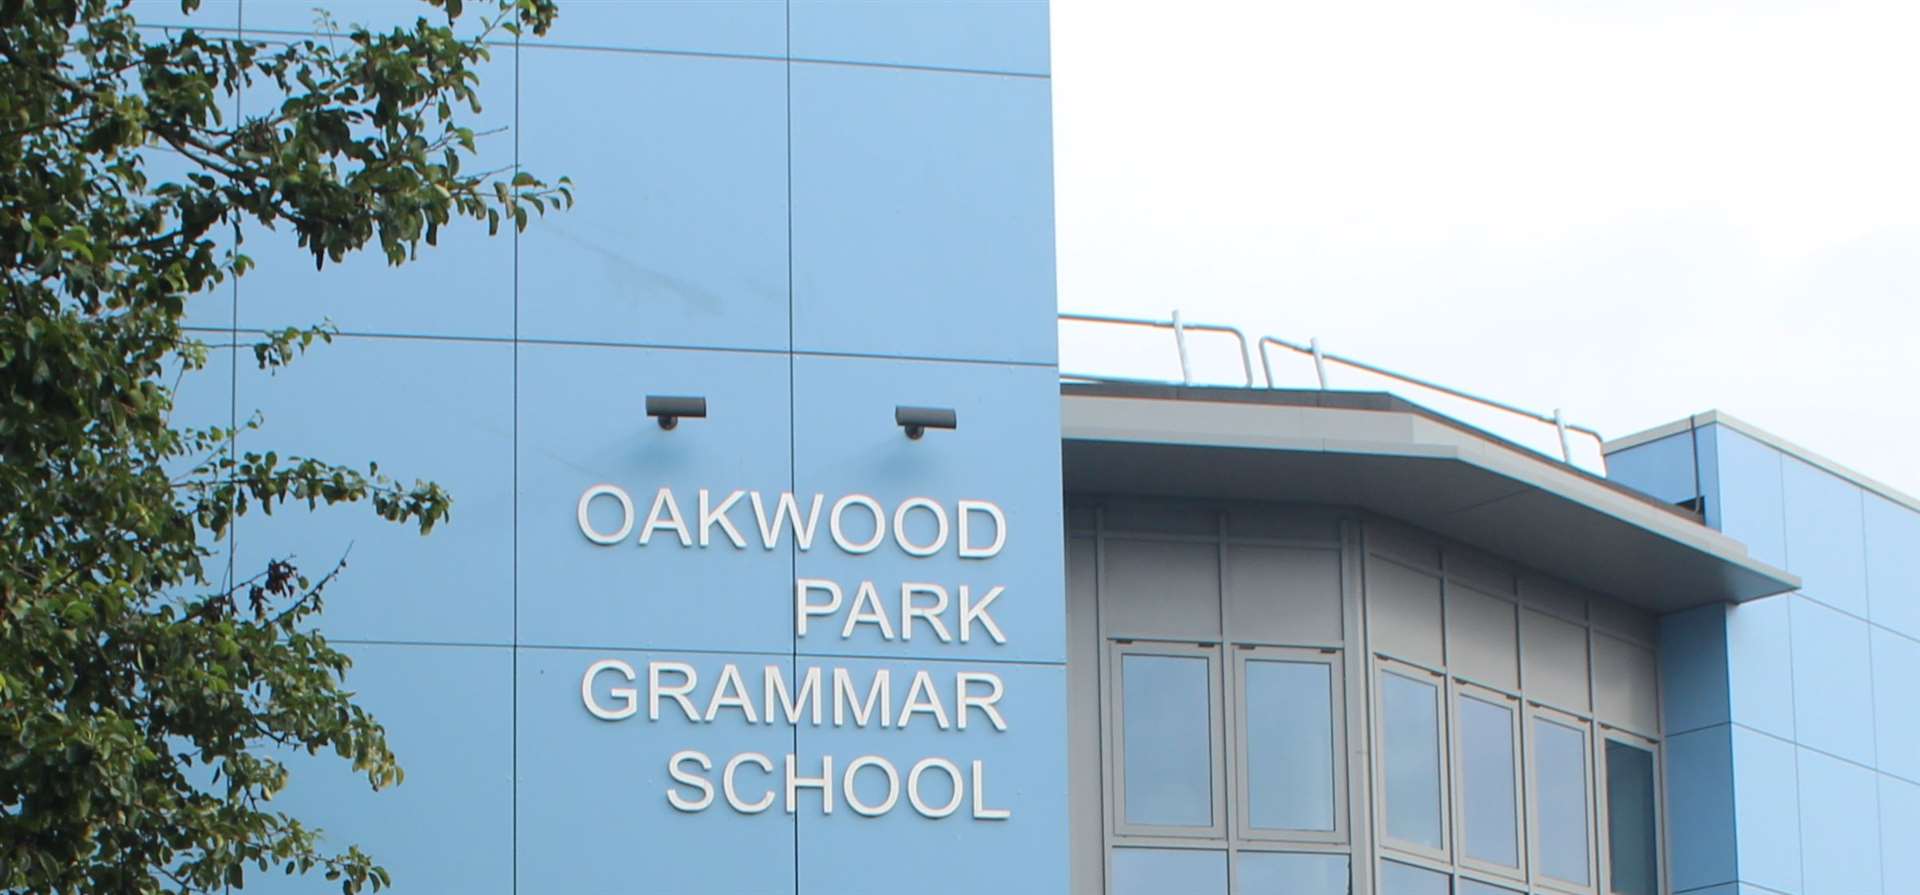 Oakwood Park Grammar School